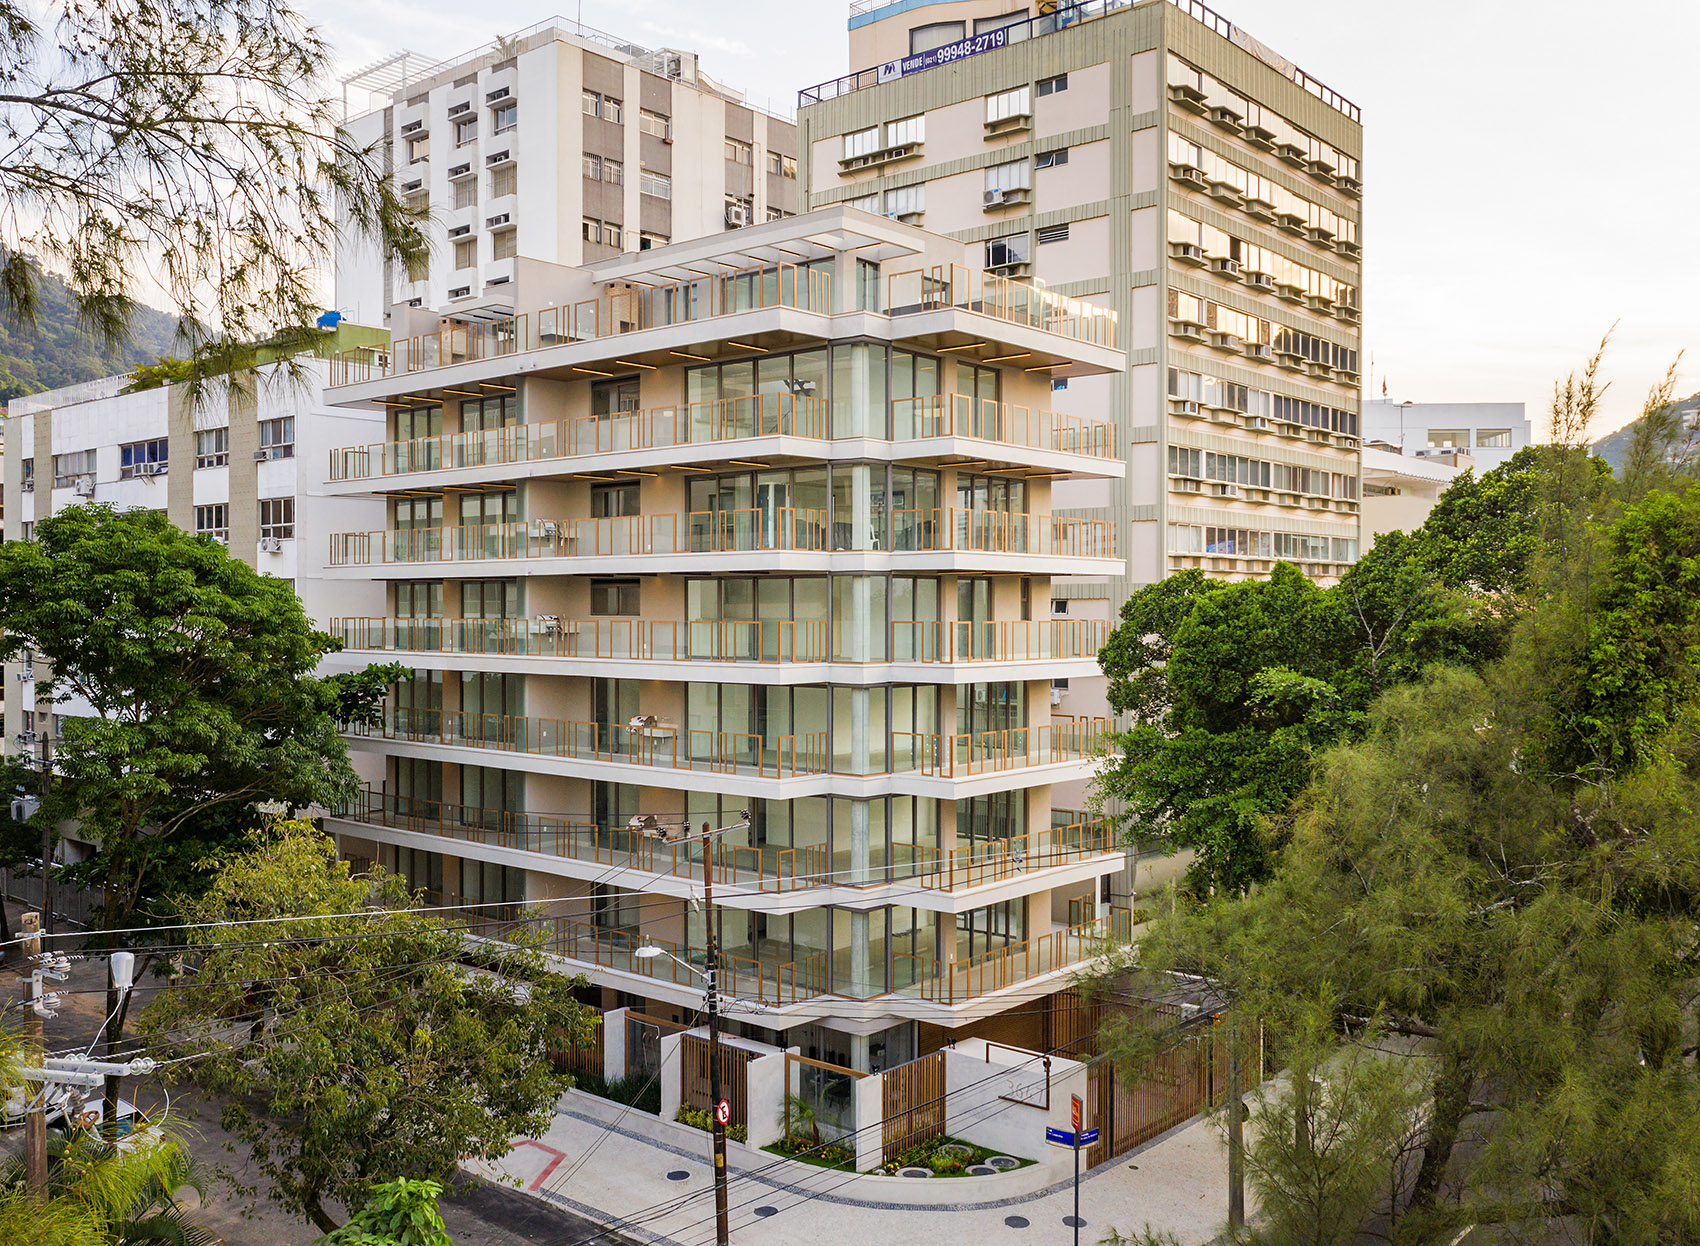 Borges 3647公寓楼，巴西/可以看到基督神像与泻湖景观的公寓楼-68